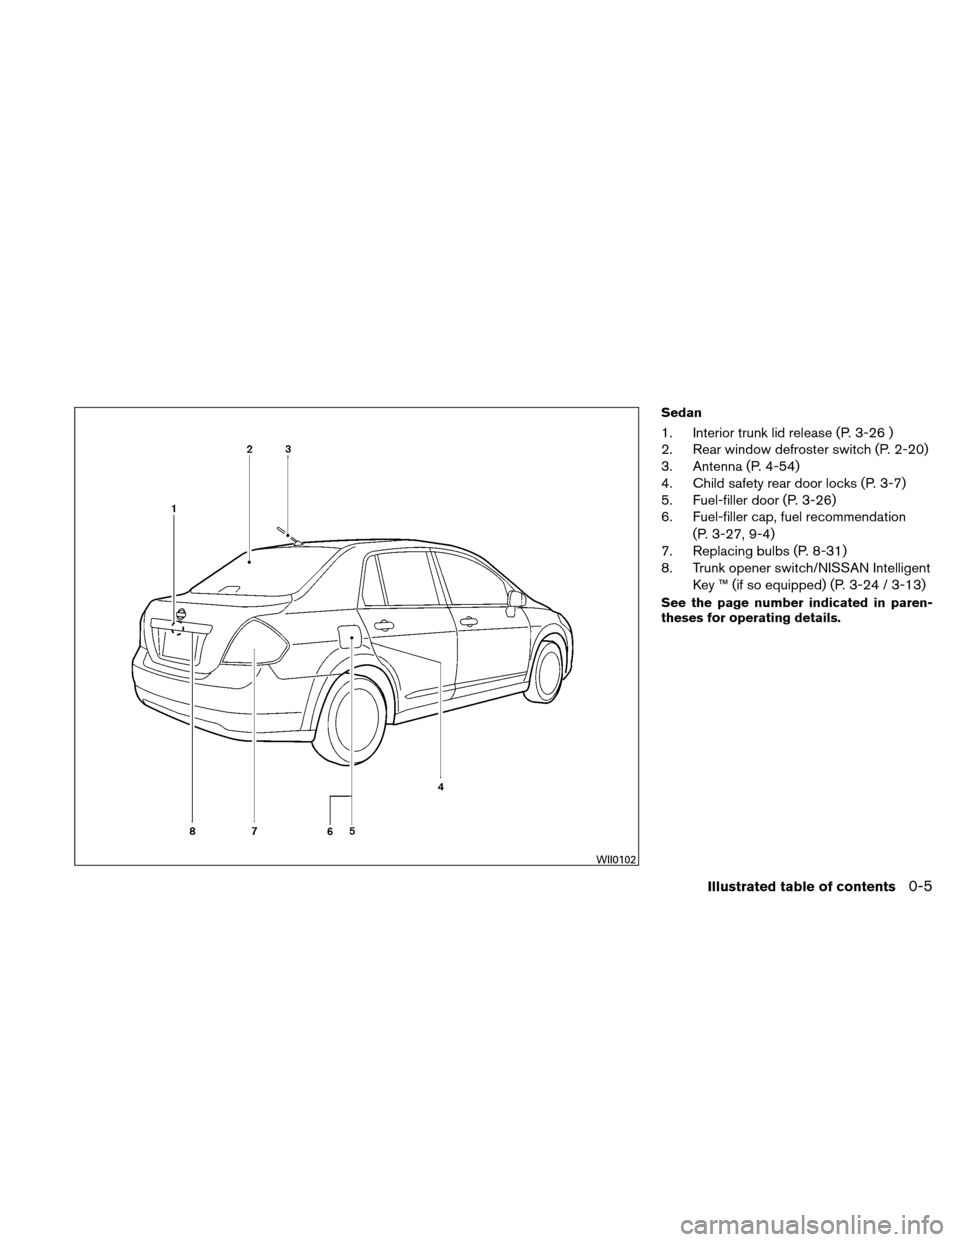 NISSAN VERSA HATCHBACK 2011 1.G User Guide Sedan
1. Interior trunk lid release (P. 3-26 )
2. Rear window defroster switch (P. 2-20)
3. Antenna (P. 4-54)
4. Child safety rear door locks (P. 3-7)
5. Fuel-filler door (P. 3-26)
6. Fuel-filler cap,